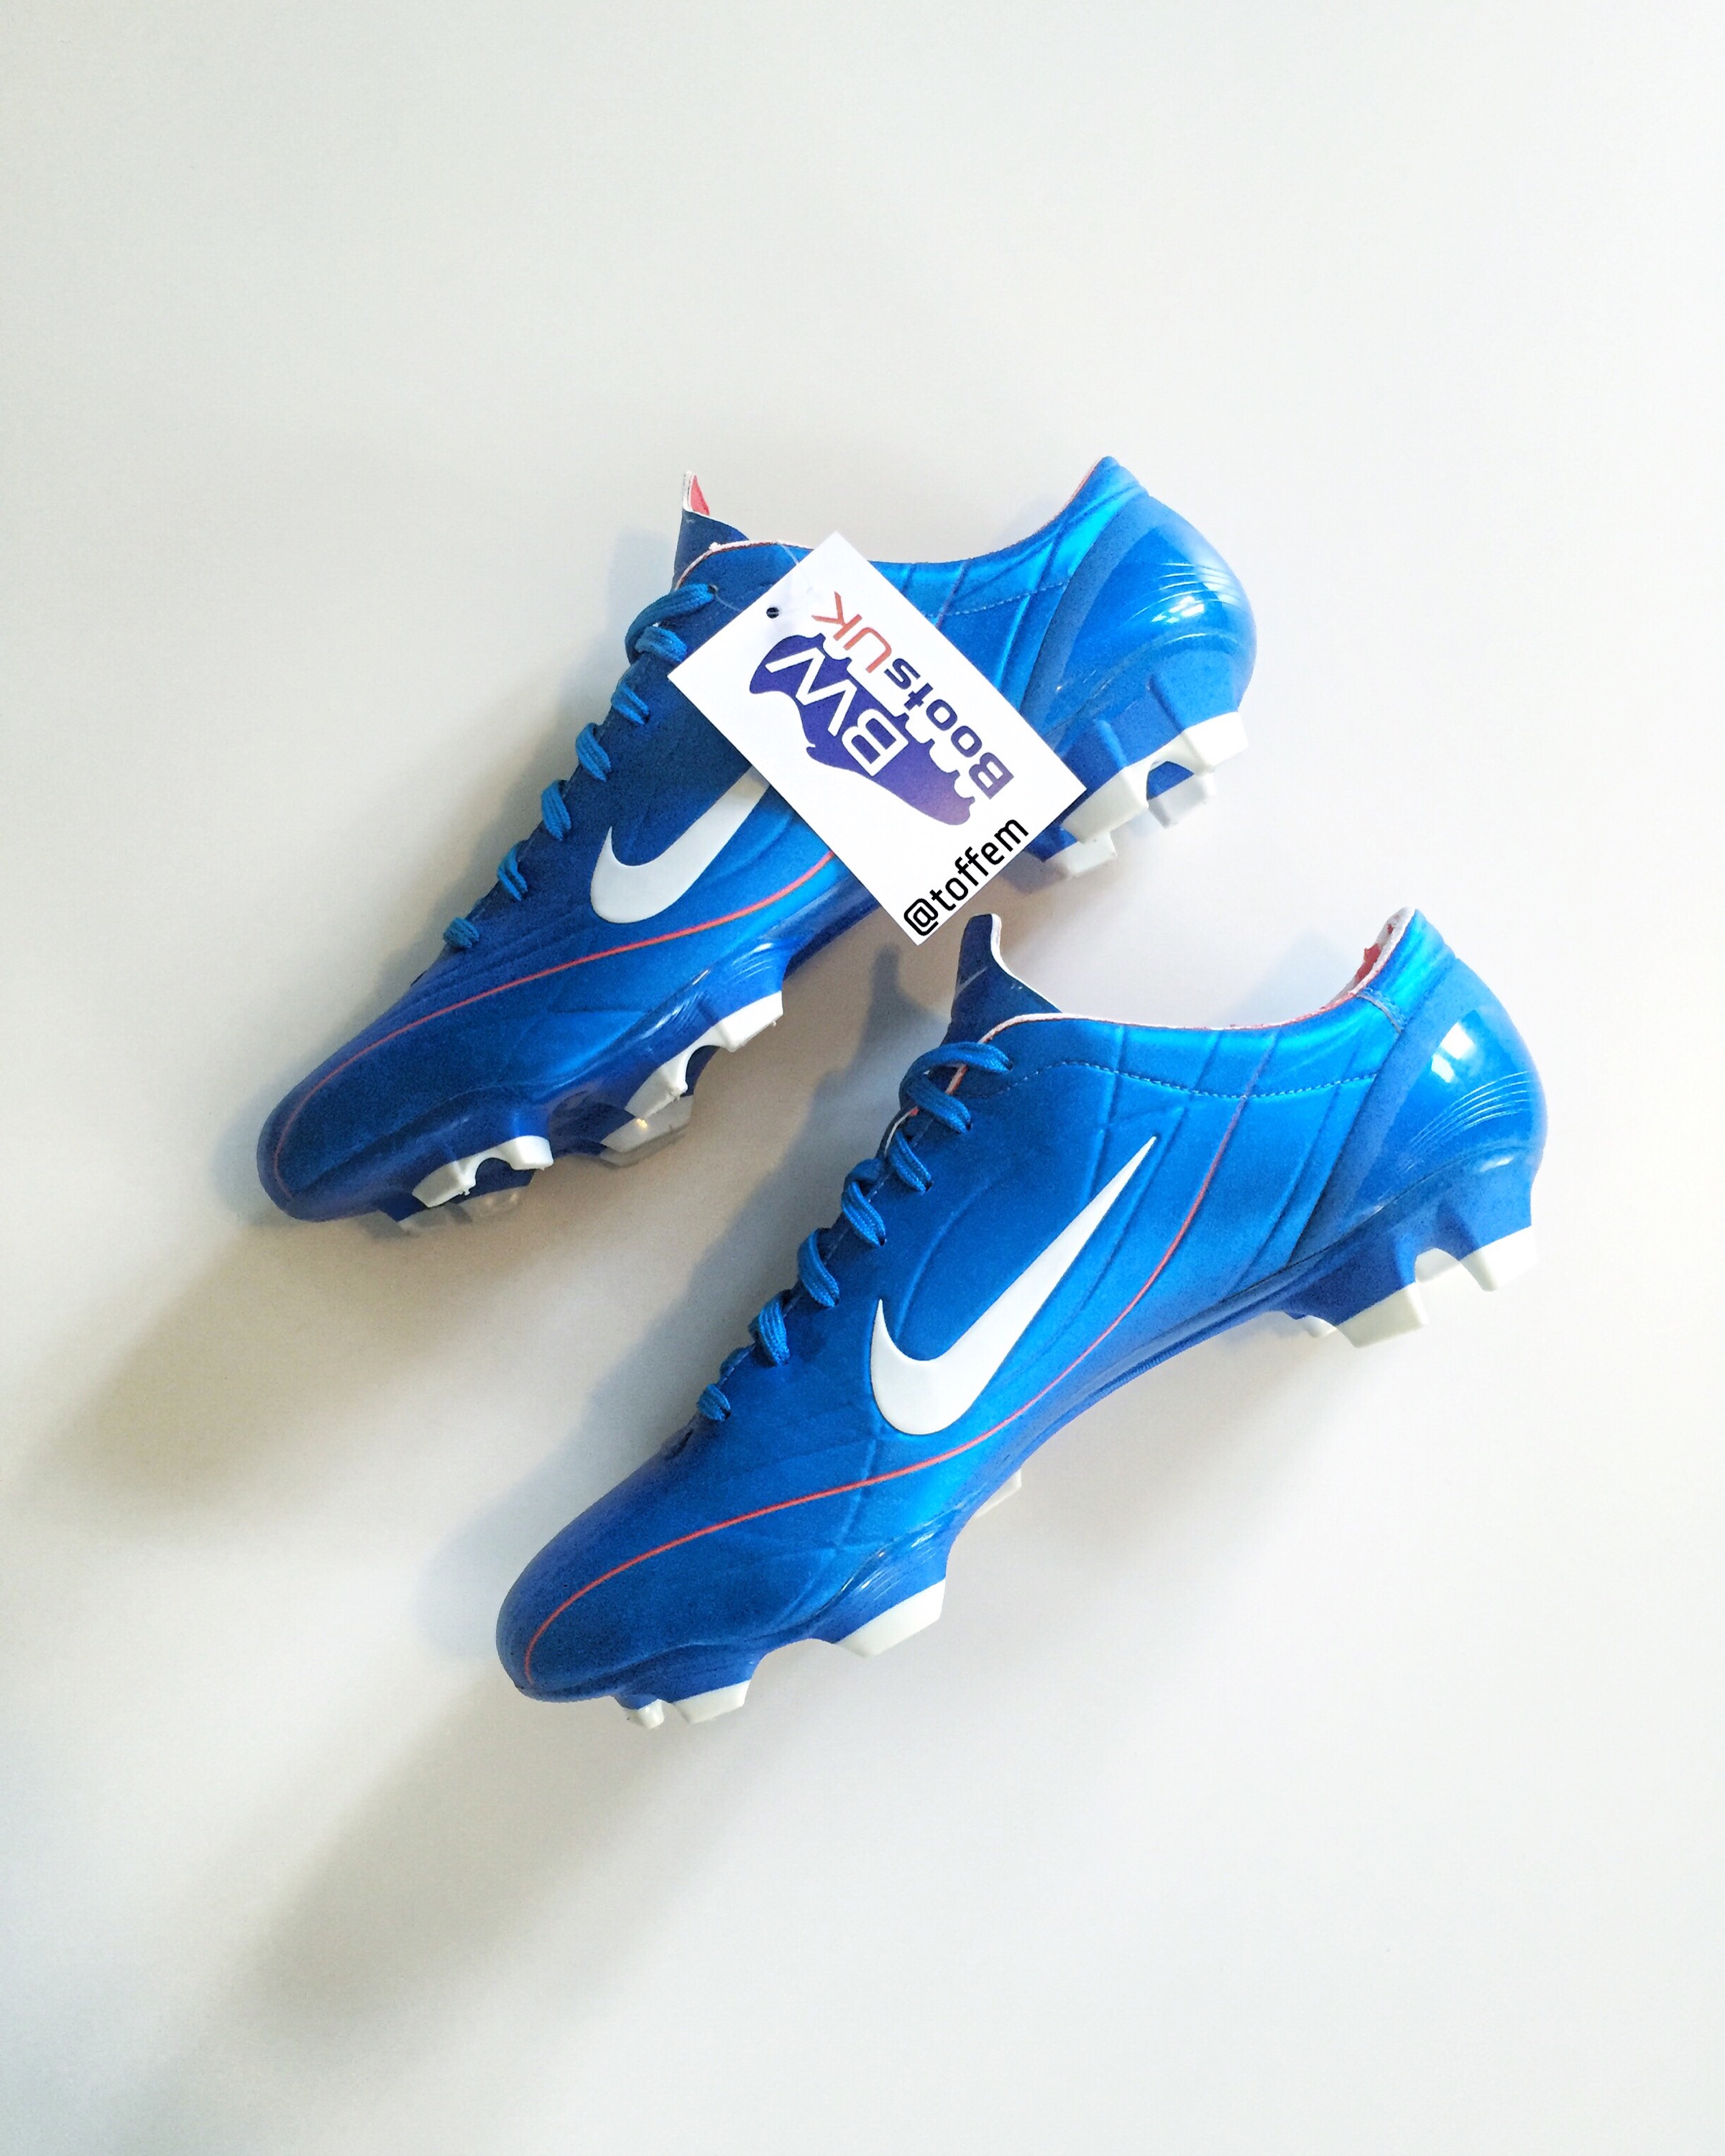 Nike Mercurial Vapor II Fg “Photo blue” – Boots Vault